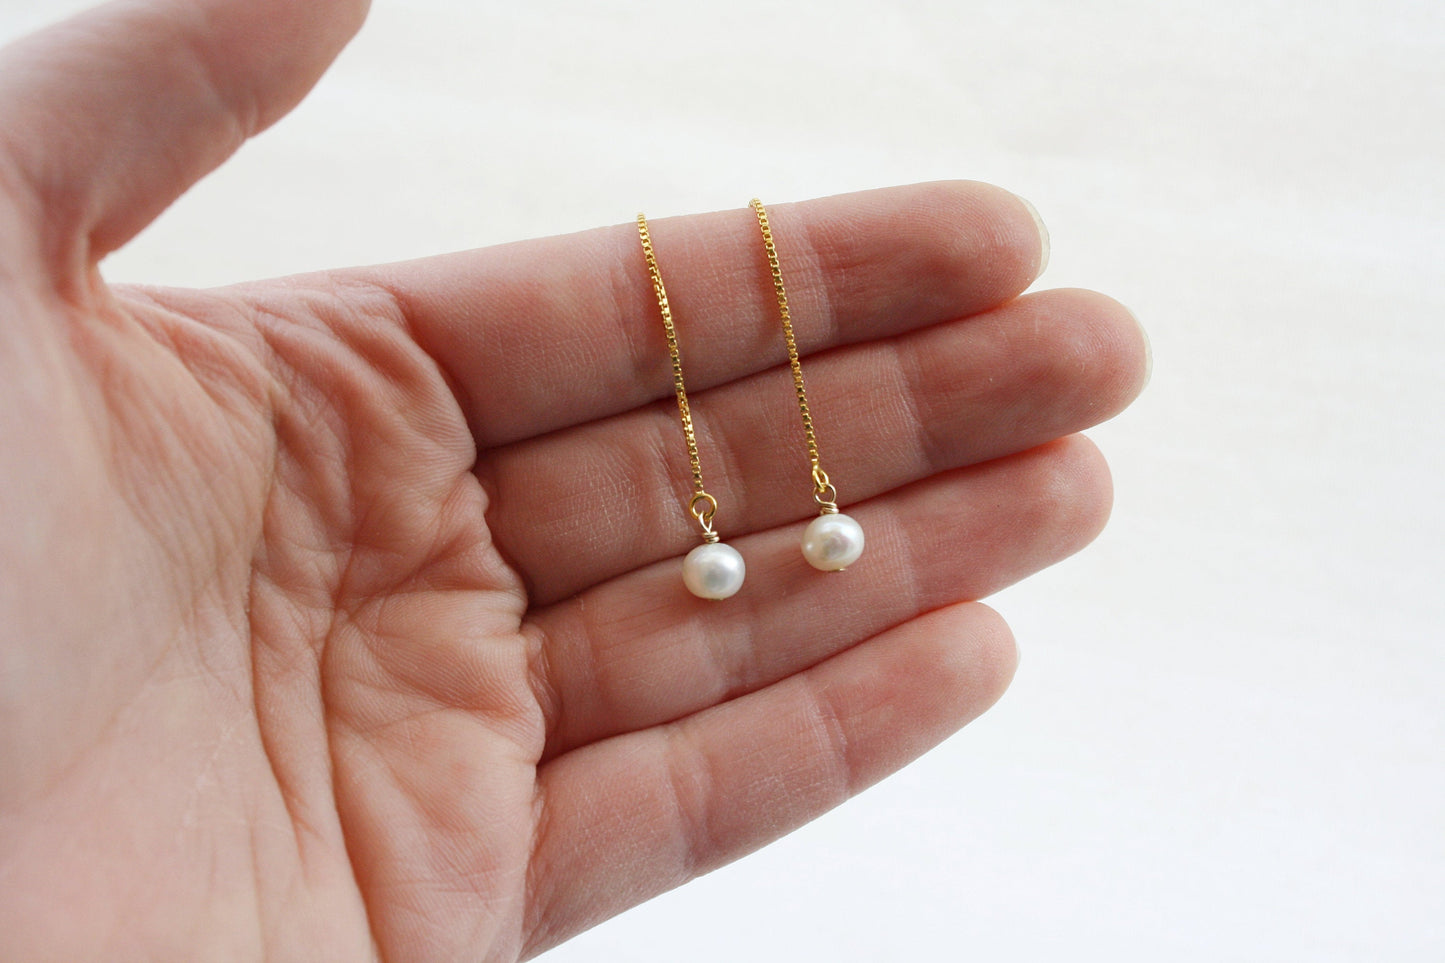 Freshwater Pearl Threader Earrings - June Birthstone